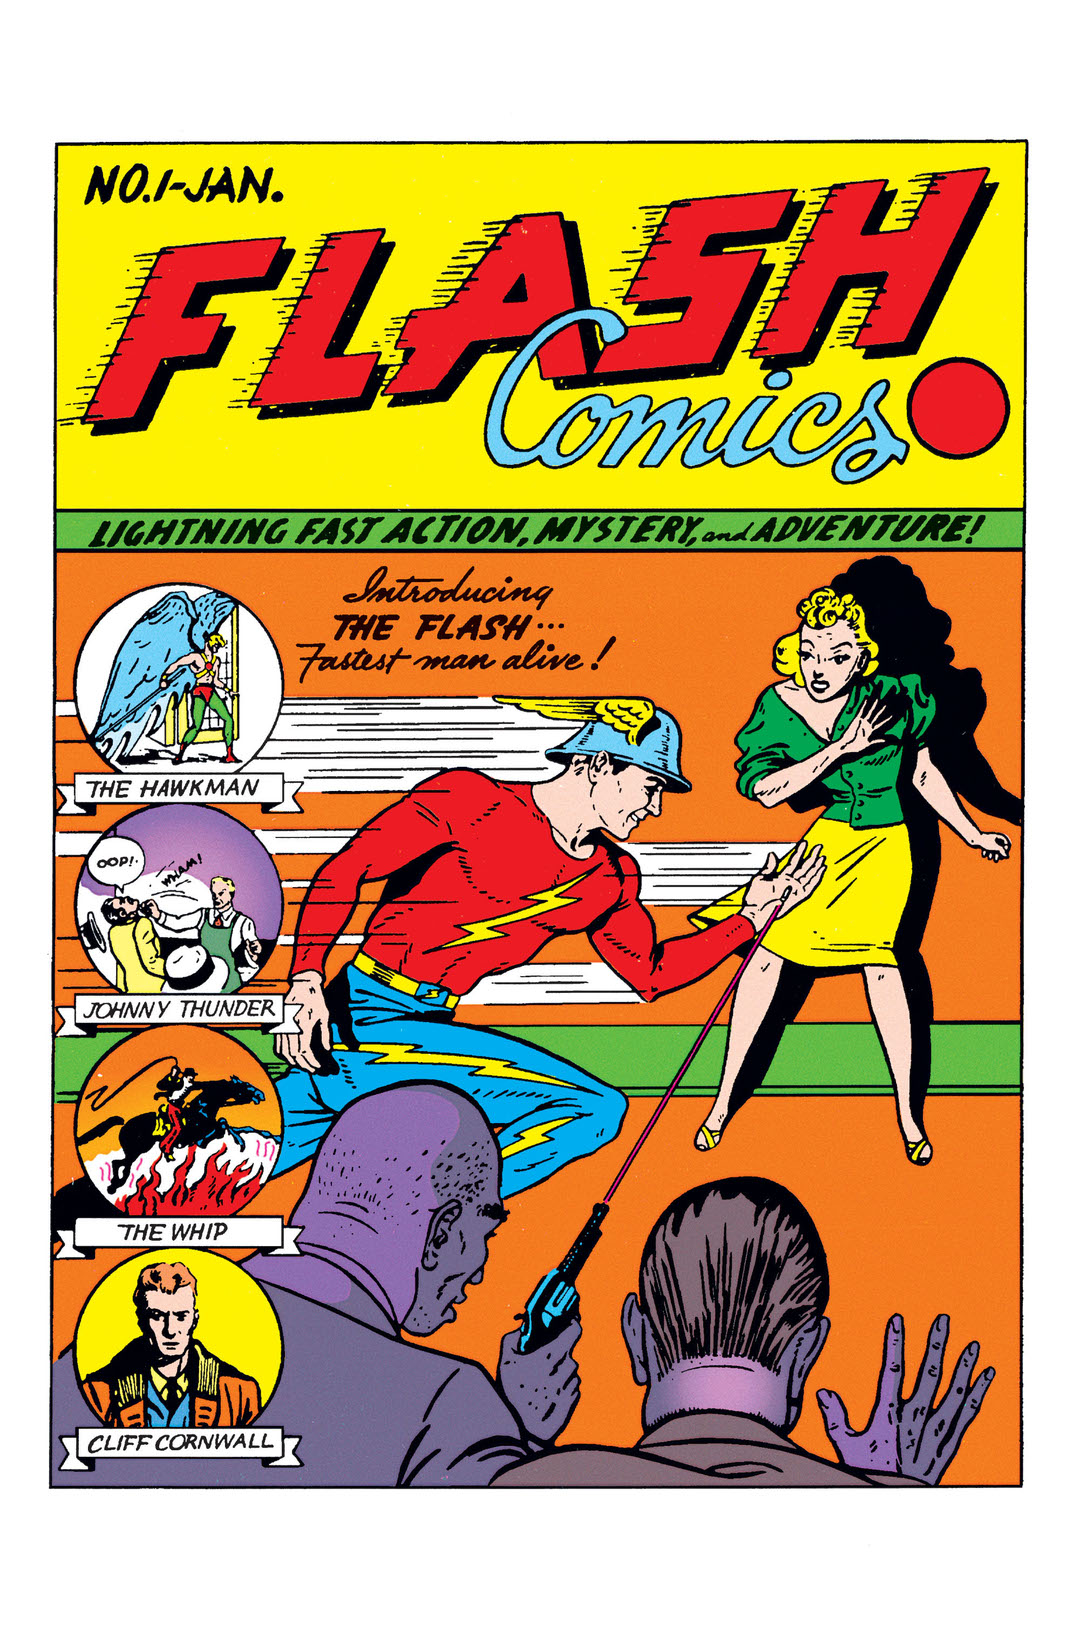 Flash Comics #1 preview images